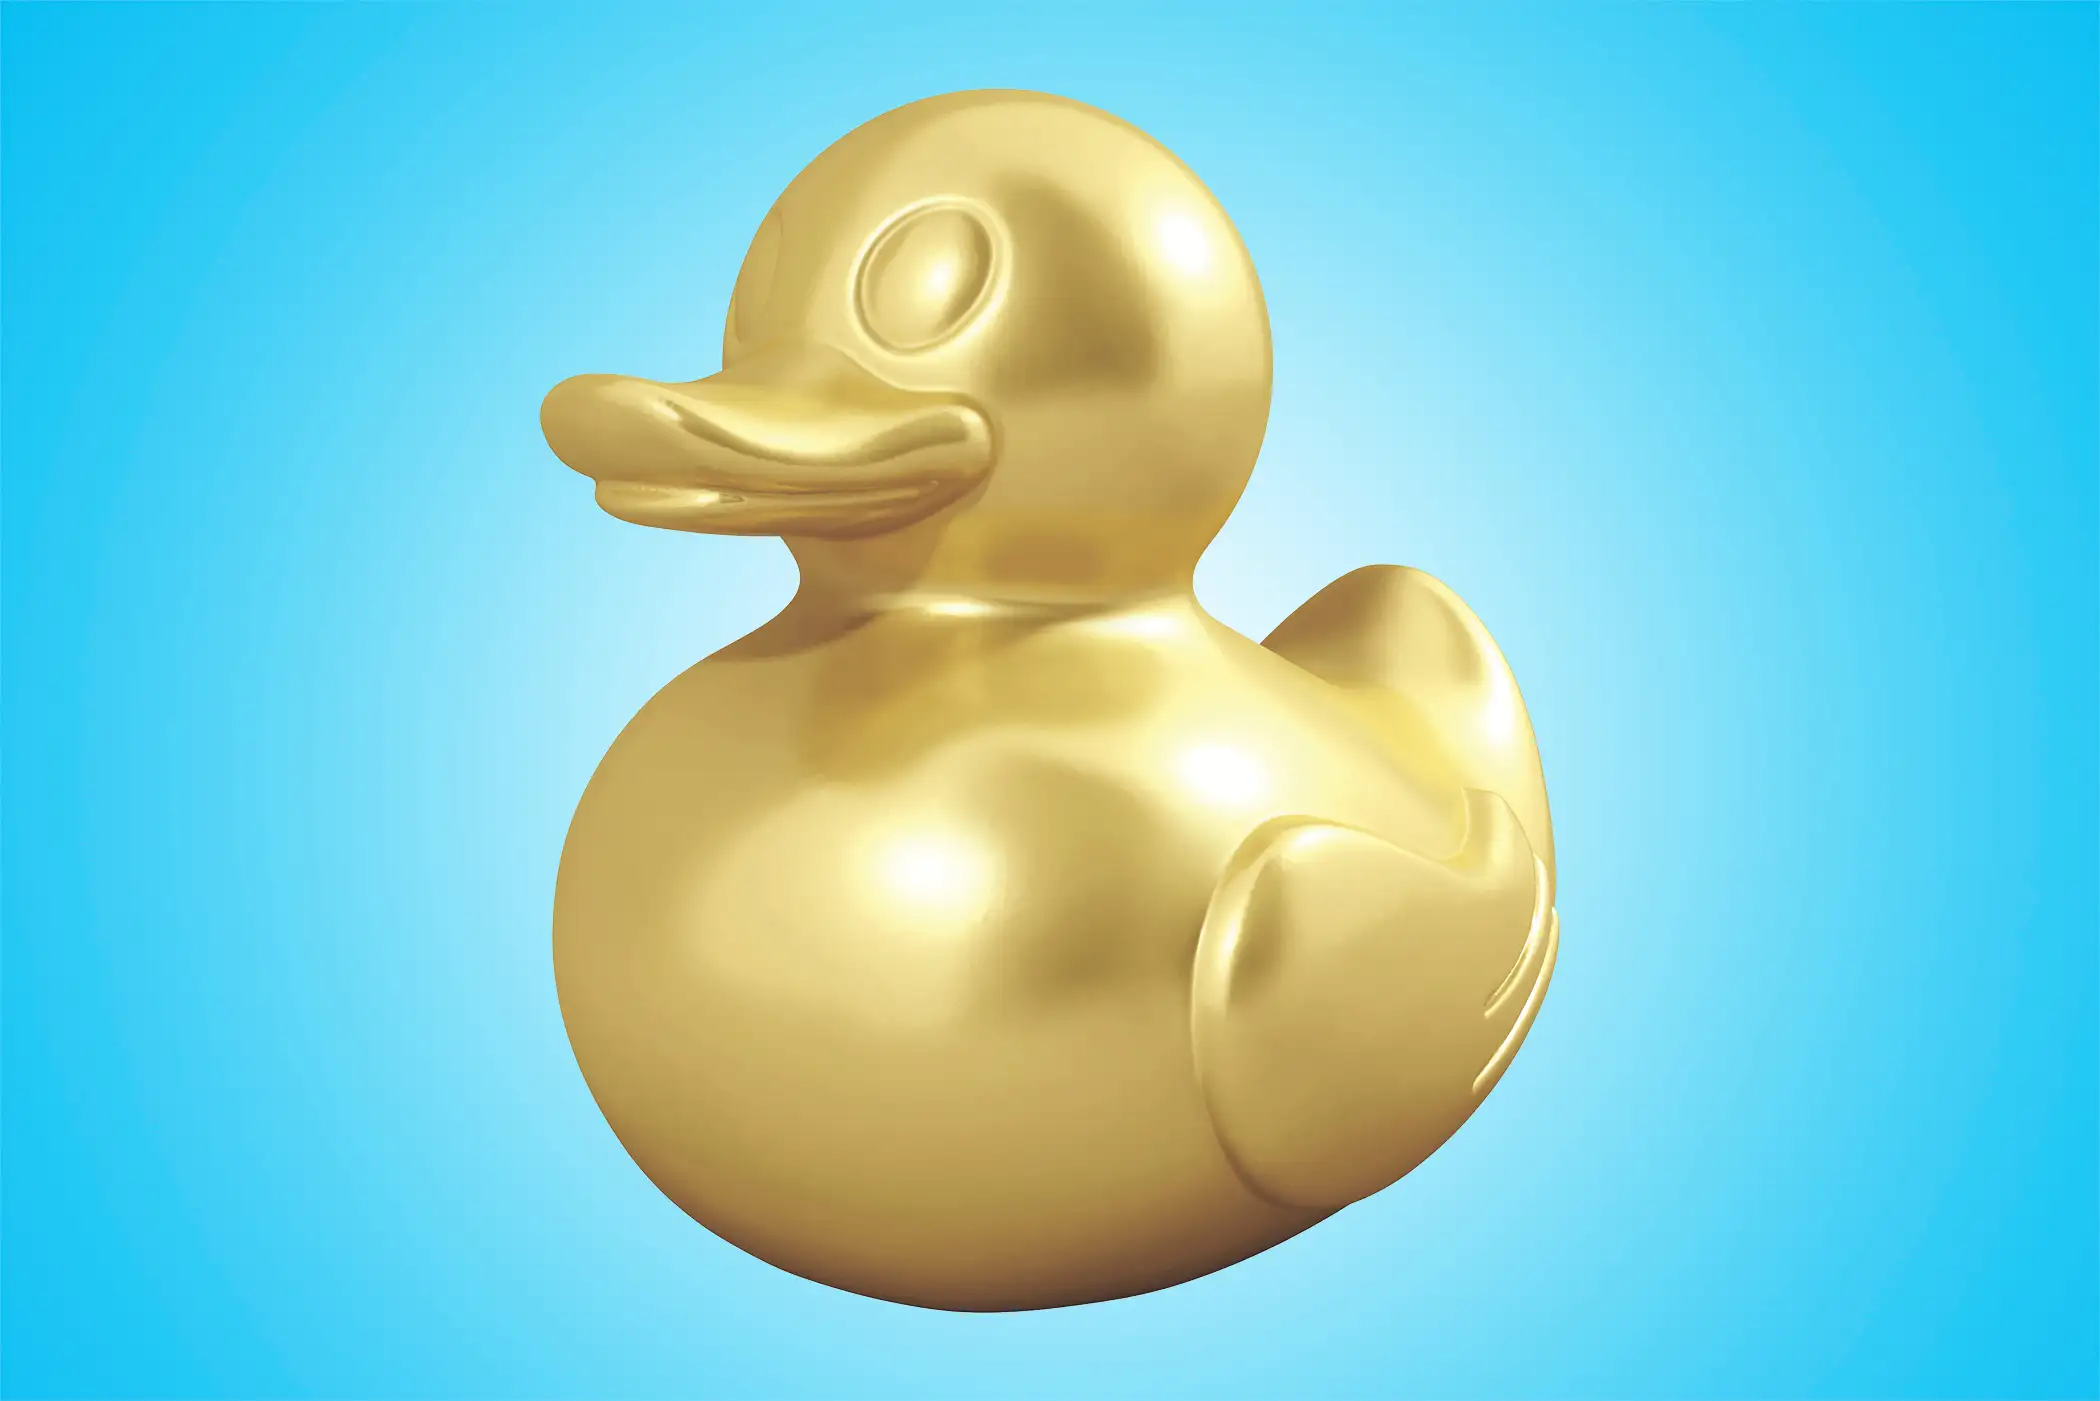 new rubber ducky monopoly token